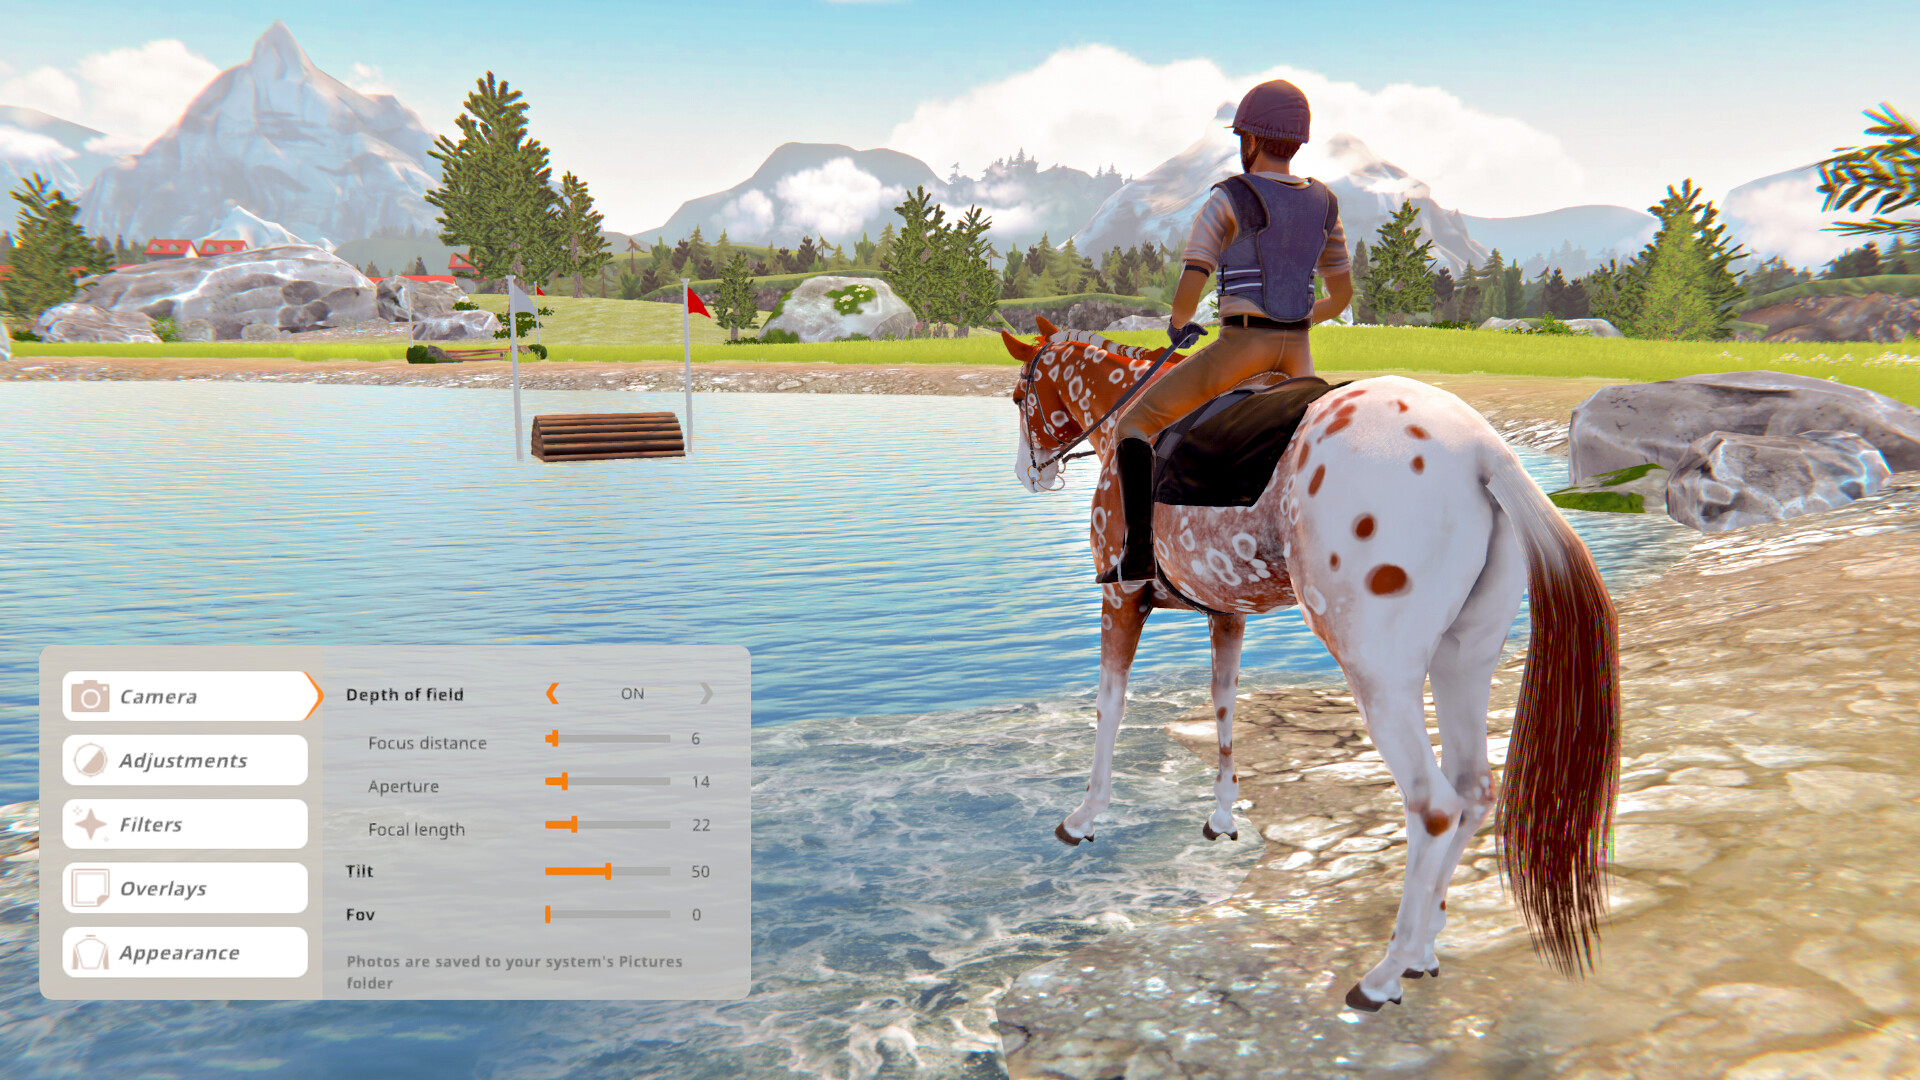 Comunidade Steam :: Rival Stars Horse Racing